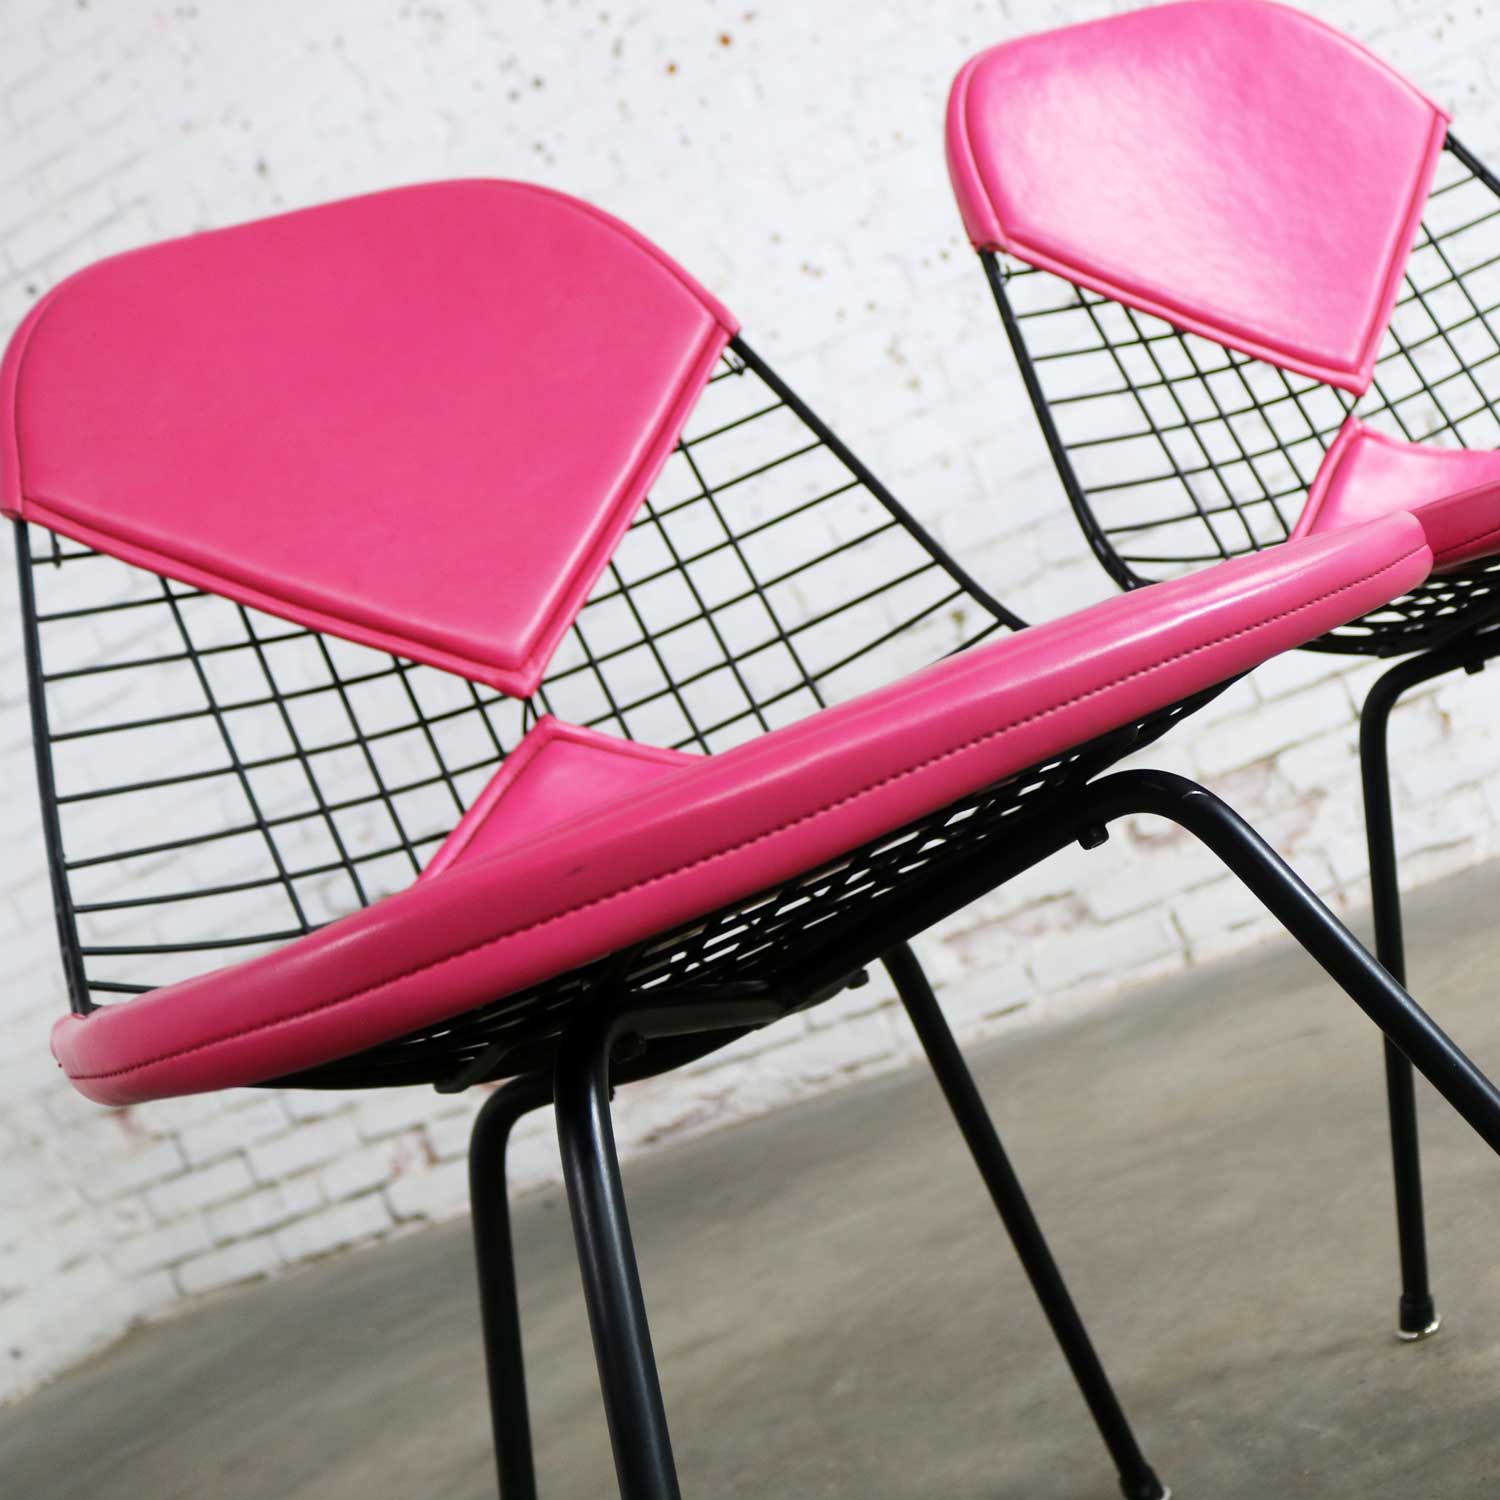 4 DKX-2 Wire Bikini Shell Chairs w/ X Bases & Hot Pink Bikinis by Eames for Herman Miller